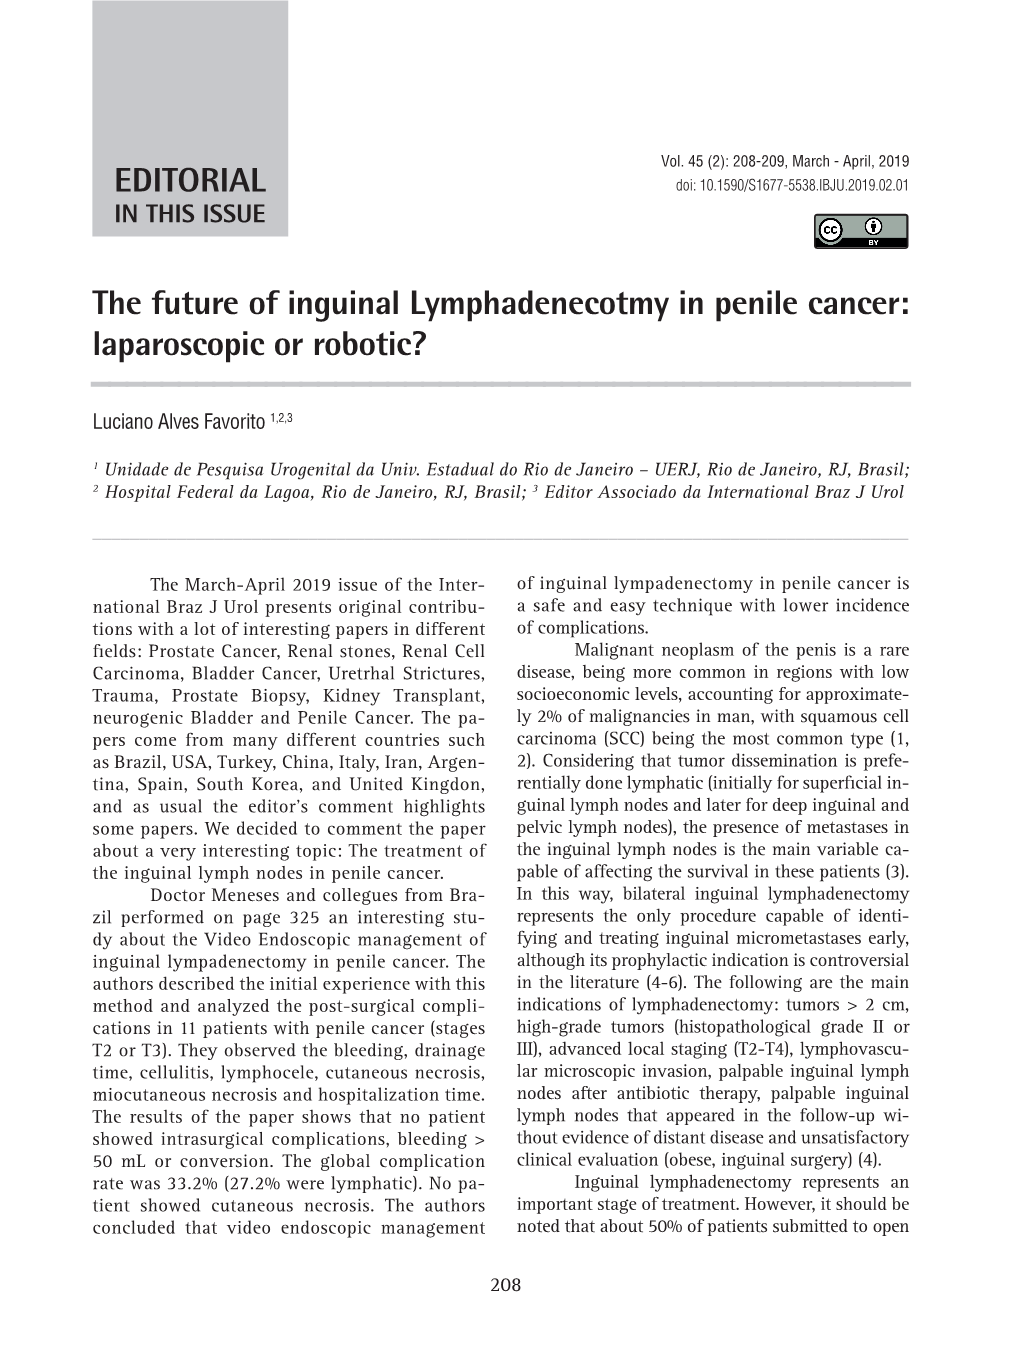 The Future of Inguinal Lymphadenecotmy in Penile Cancer: Laparoscopic Or Robotic? ______